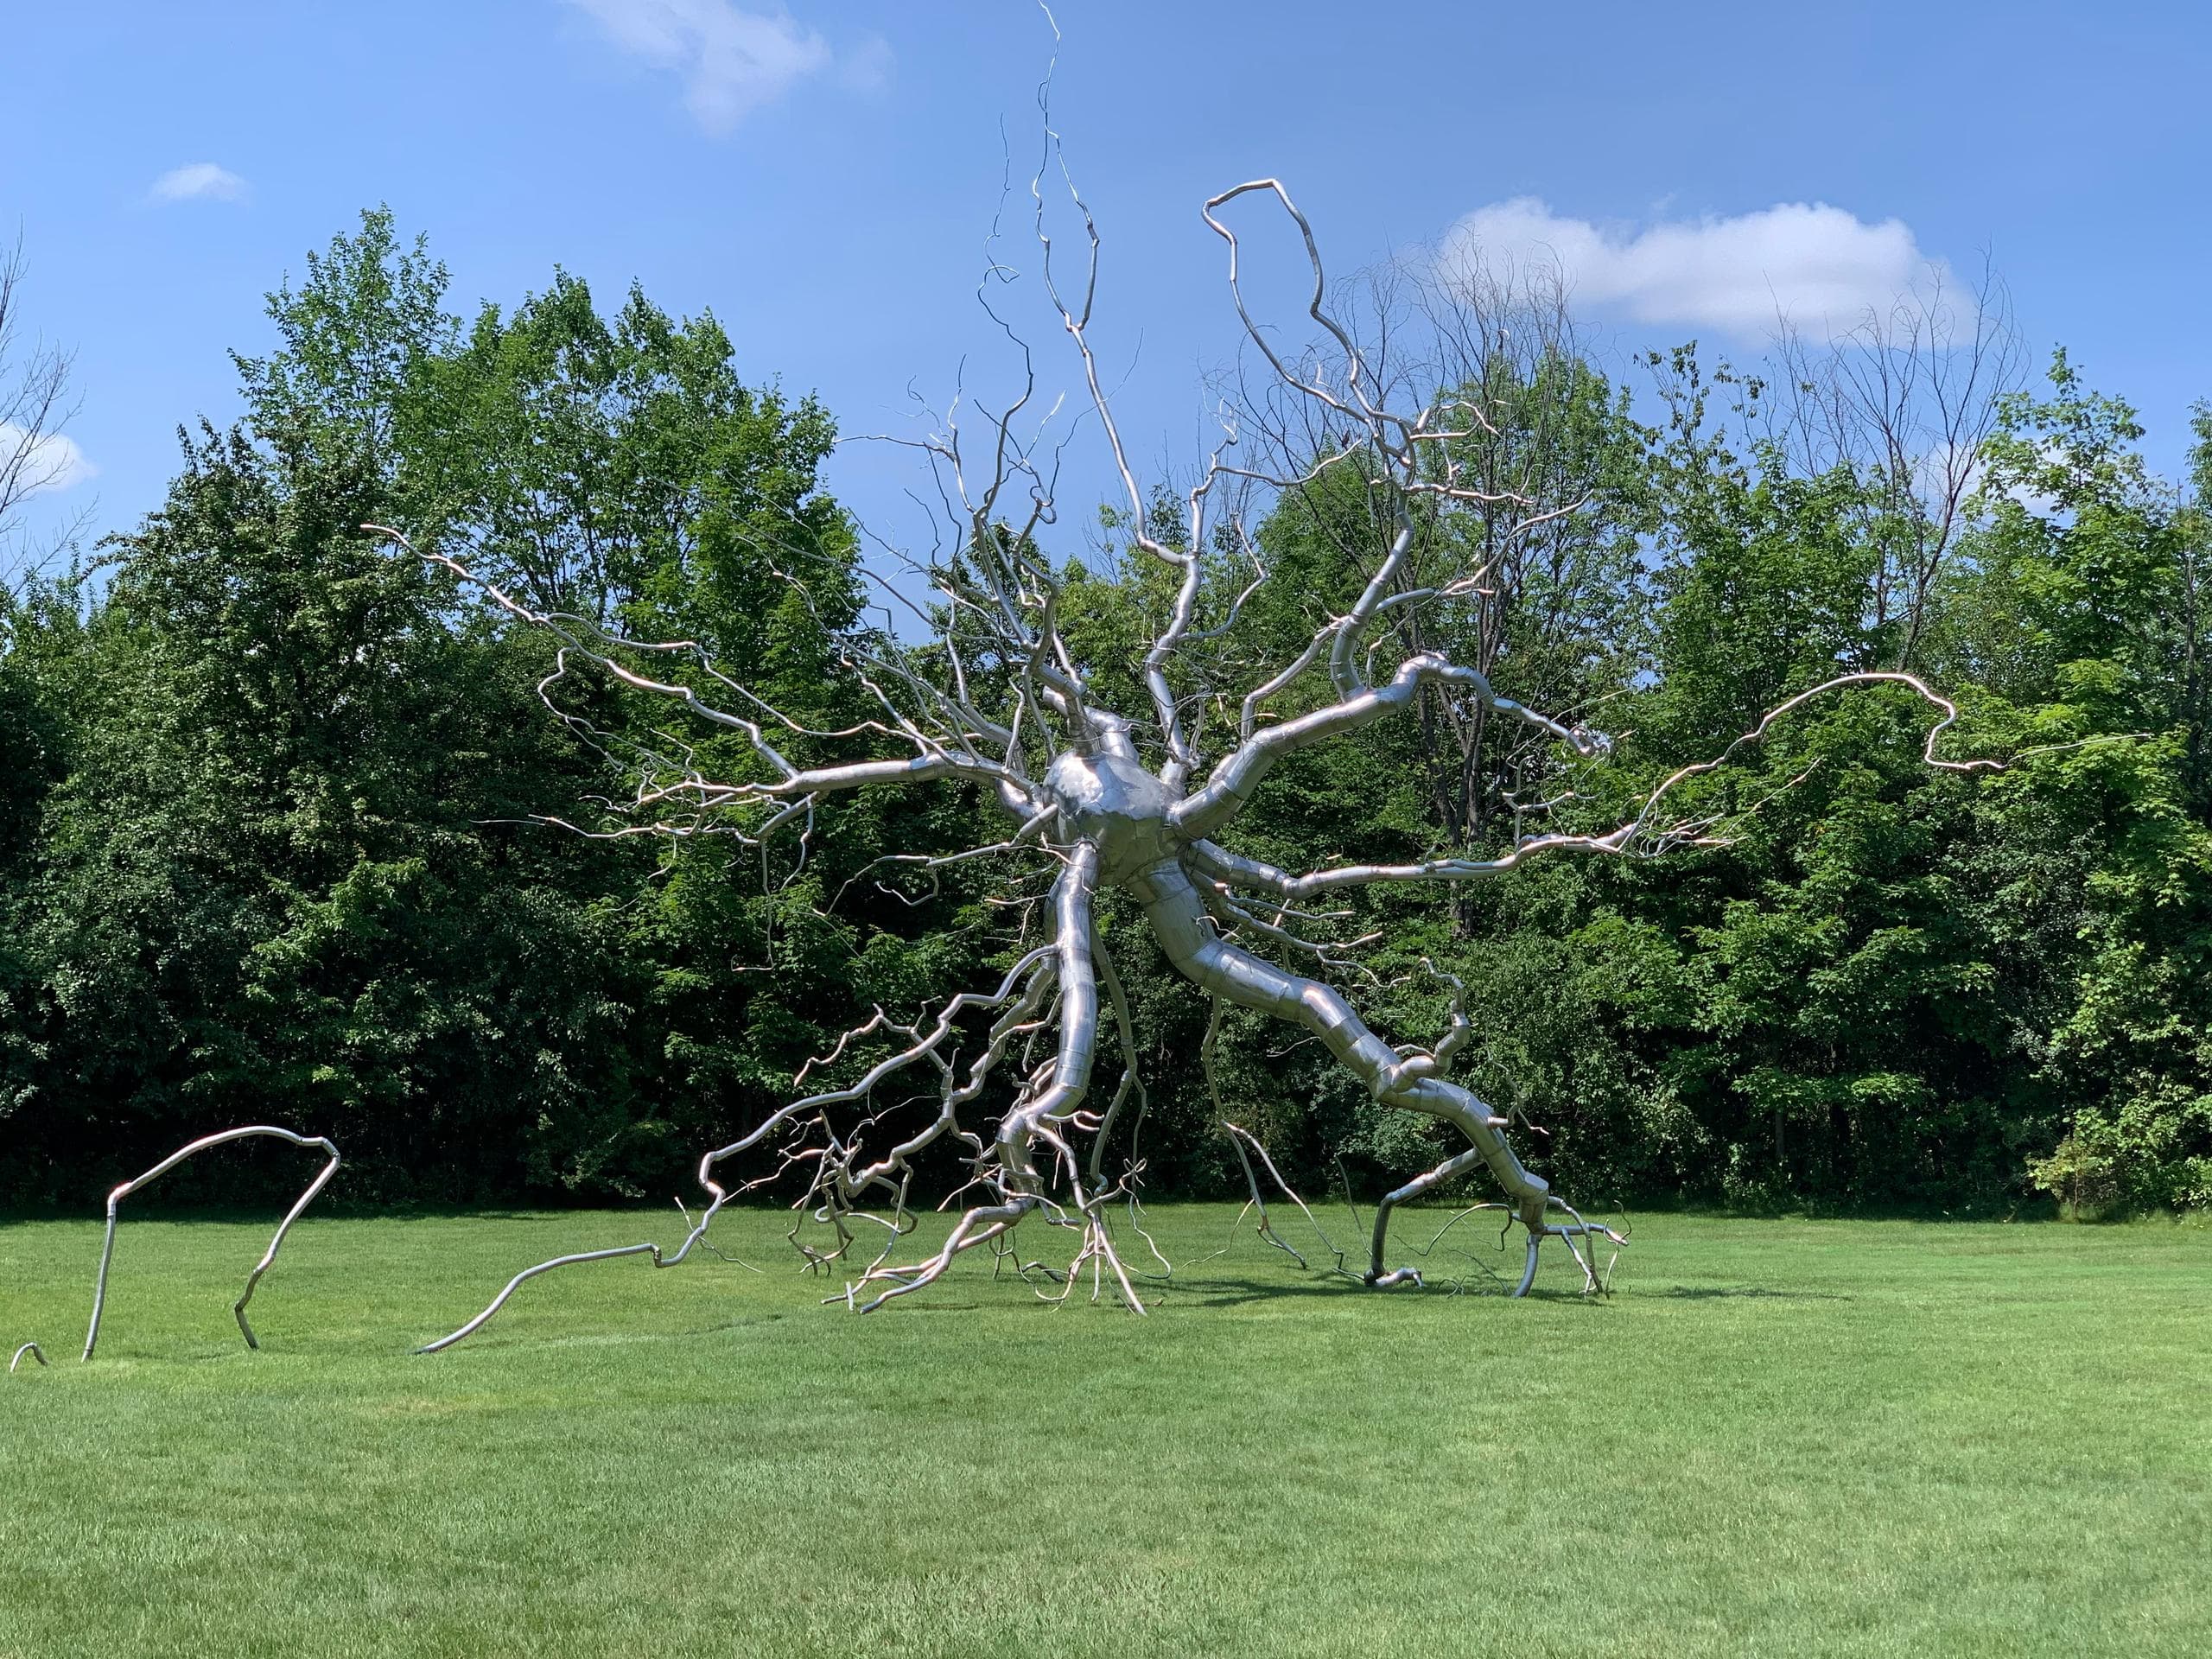 Neuron at Meijer Sculpture Garden, Grand Rapids, Michigan